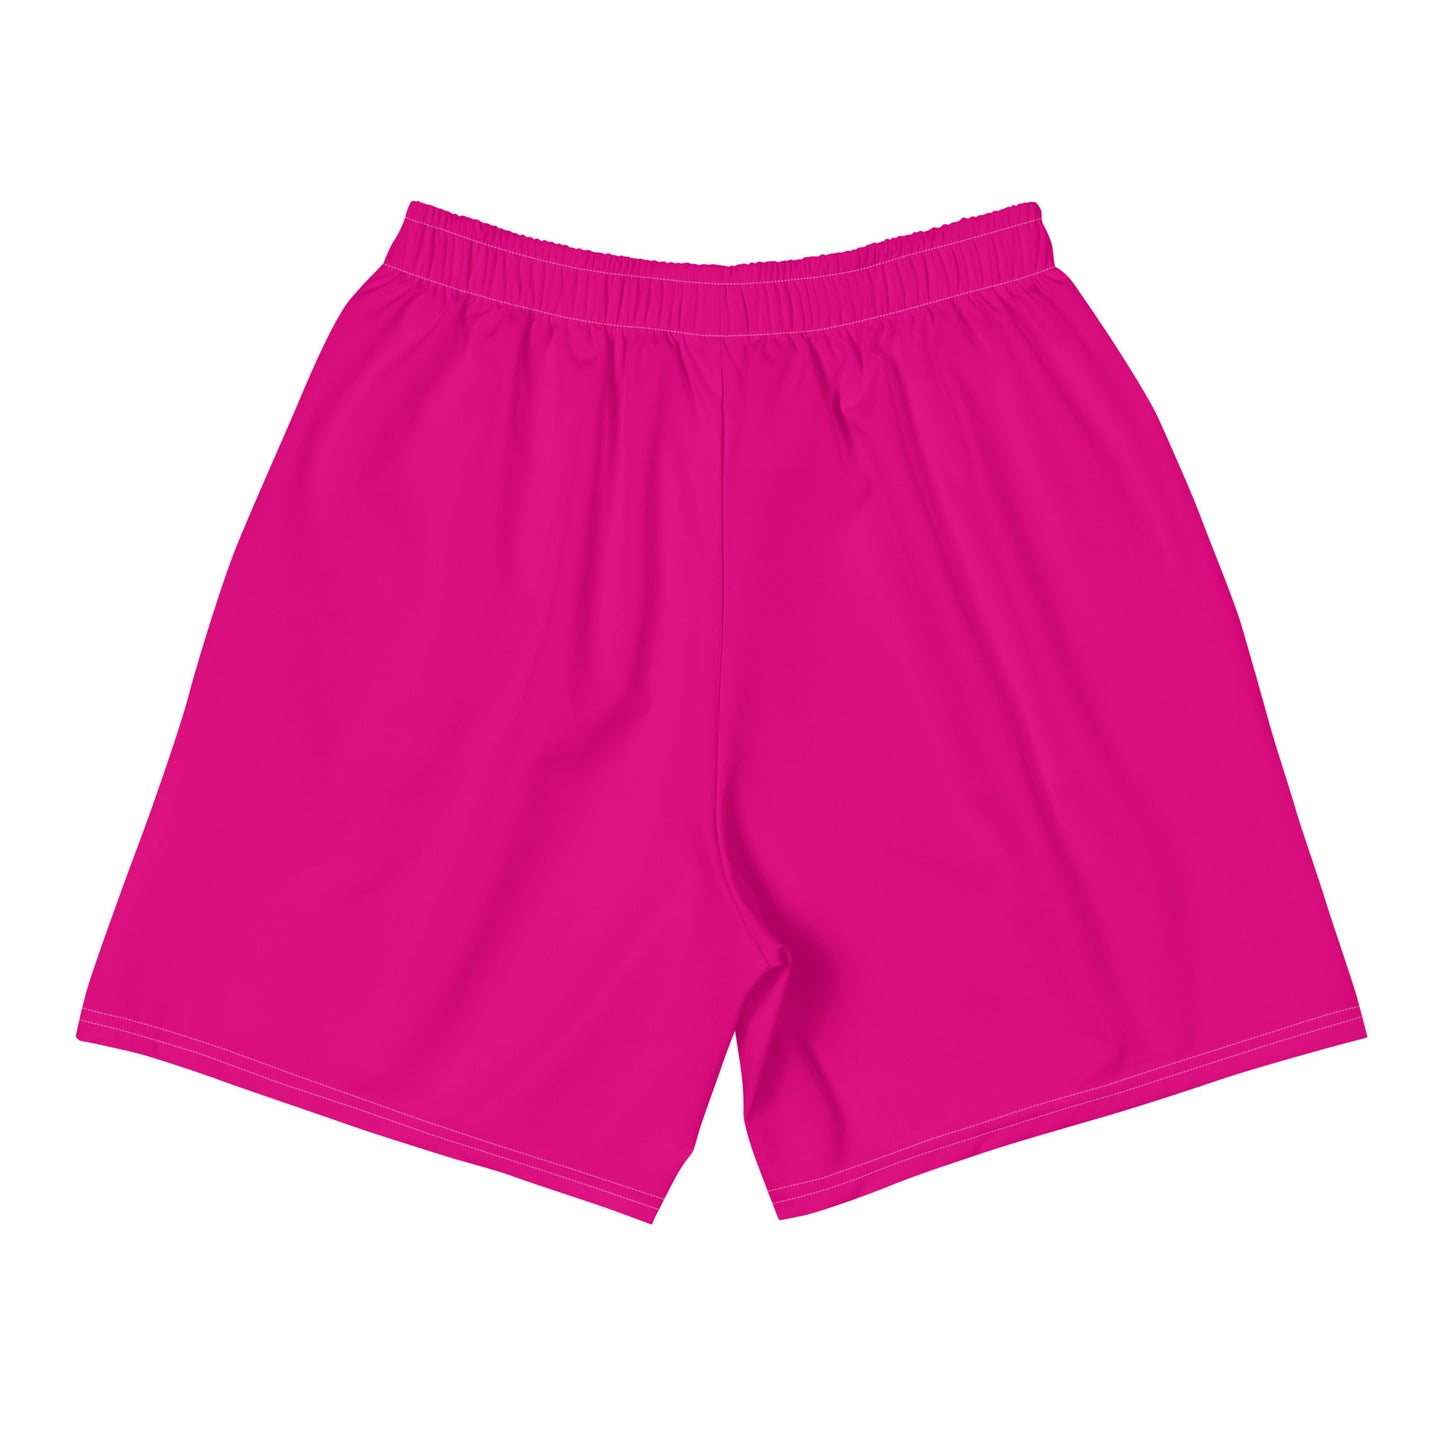 Shocking Pink - Sustainably Made Men's Short